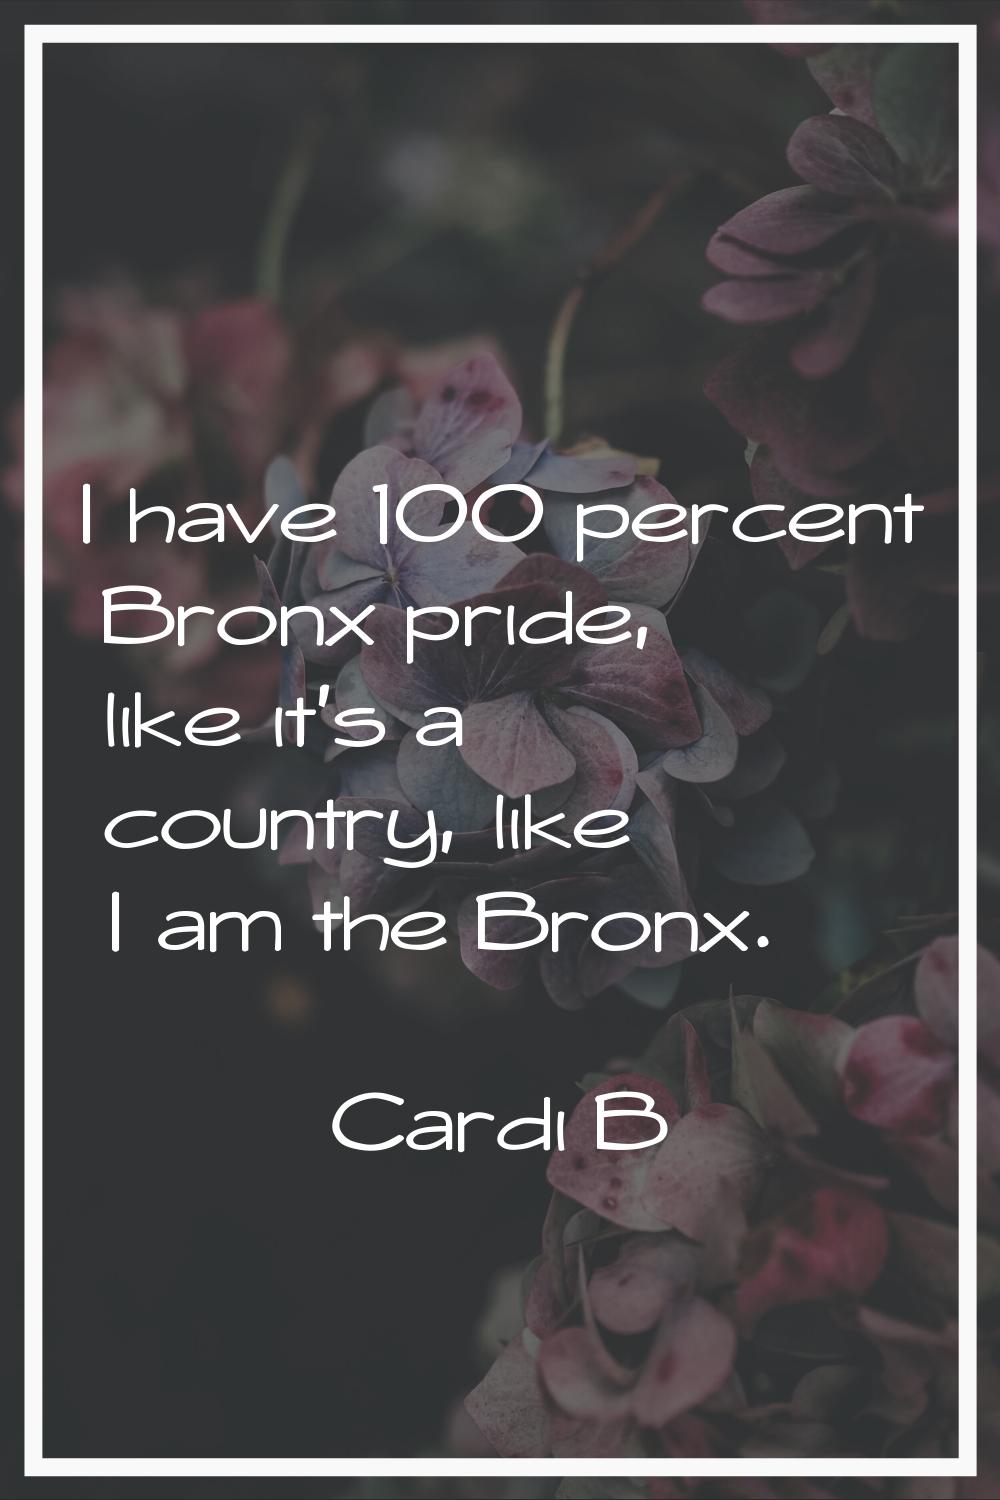 I have 100 percent Bronx pride, like it's a country, like I am the Bronx.